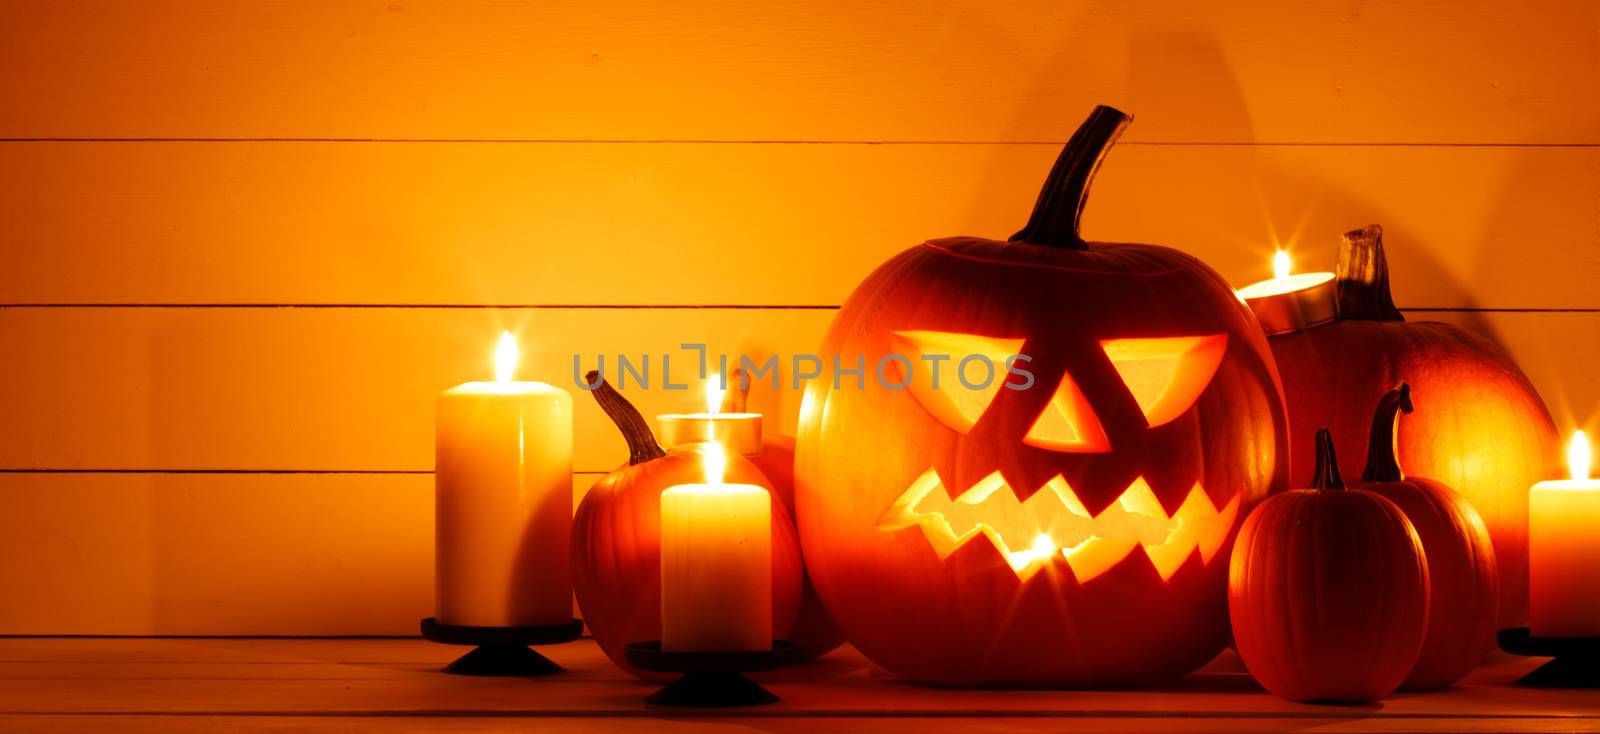 Halloween pumpkin lantern by Yellowj